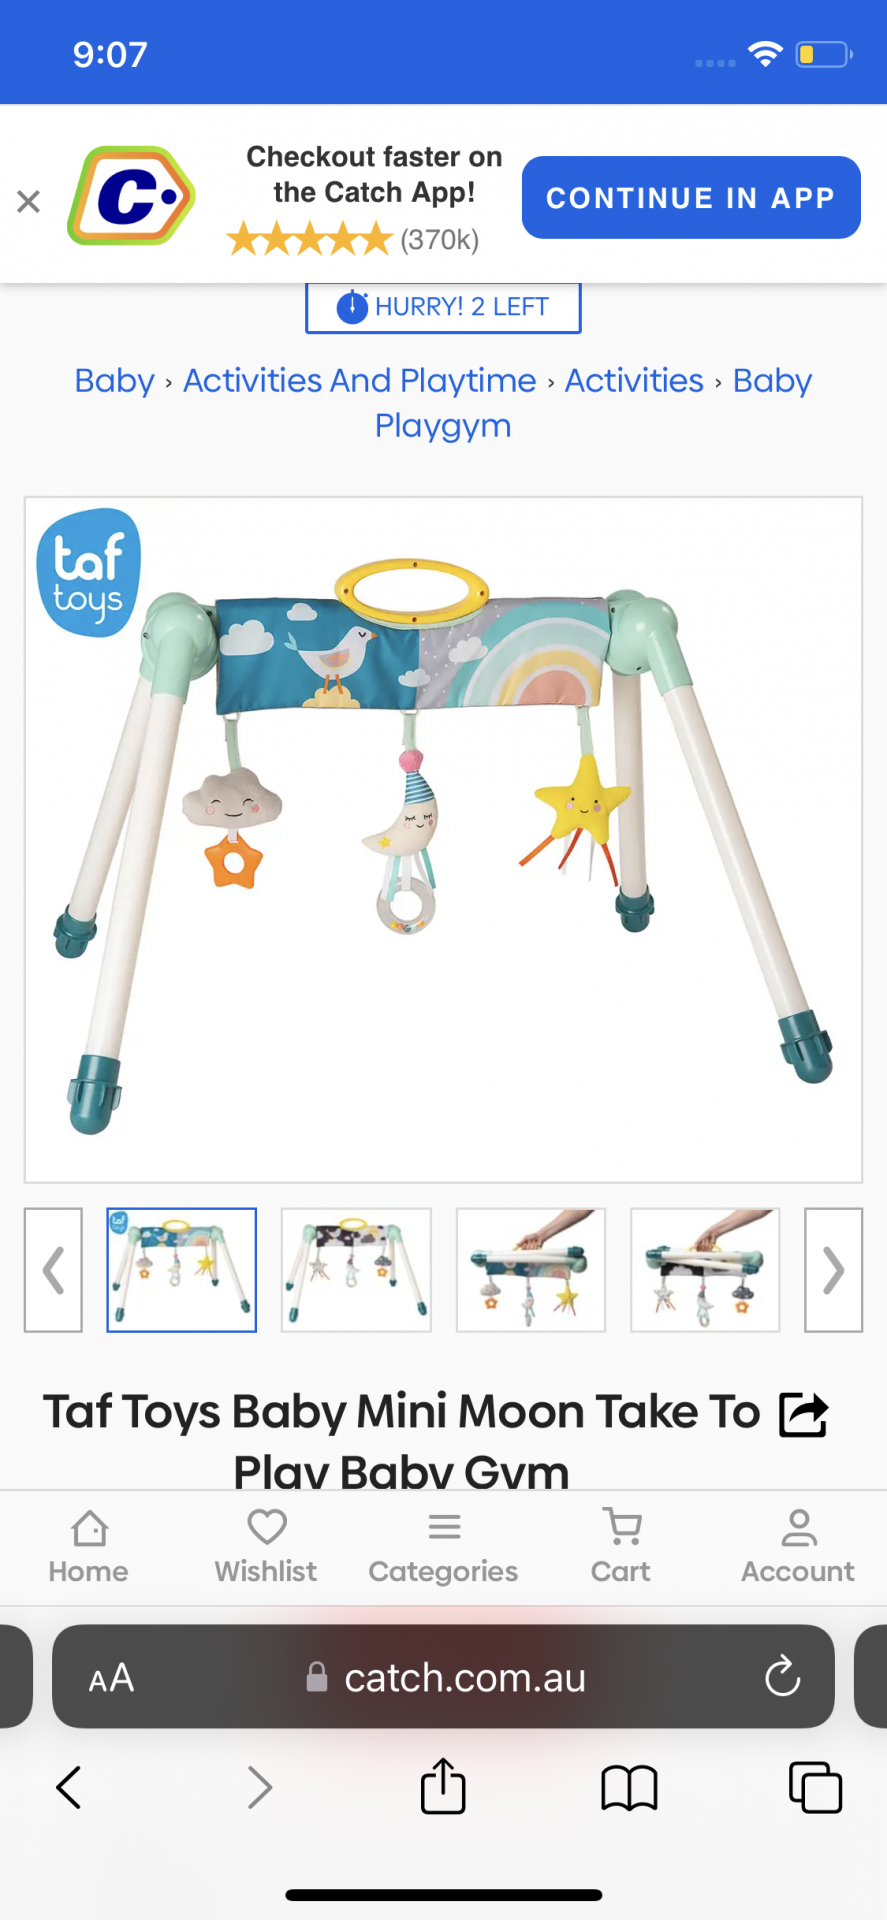 Taf Toys Baby Mini Moon Take To Play Baby Gym